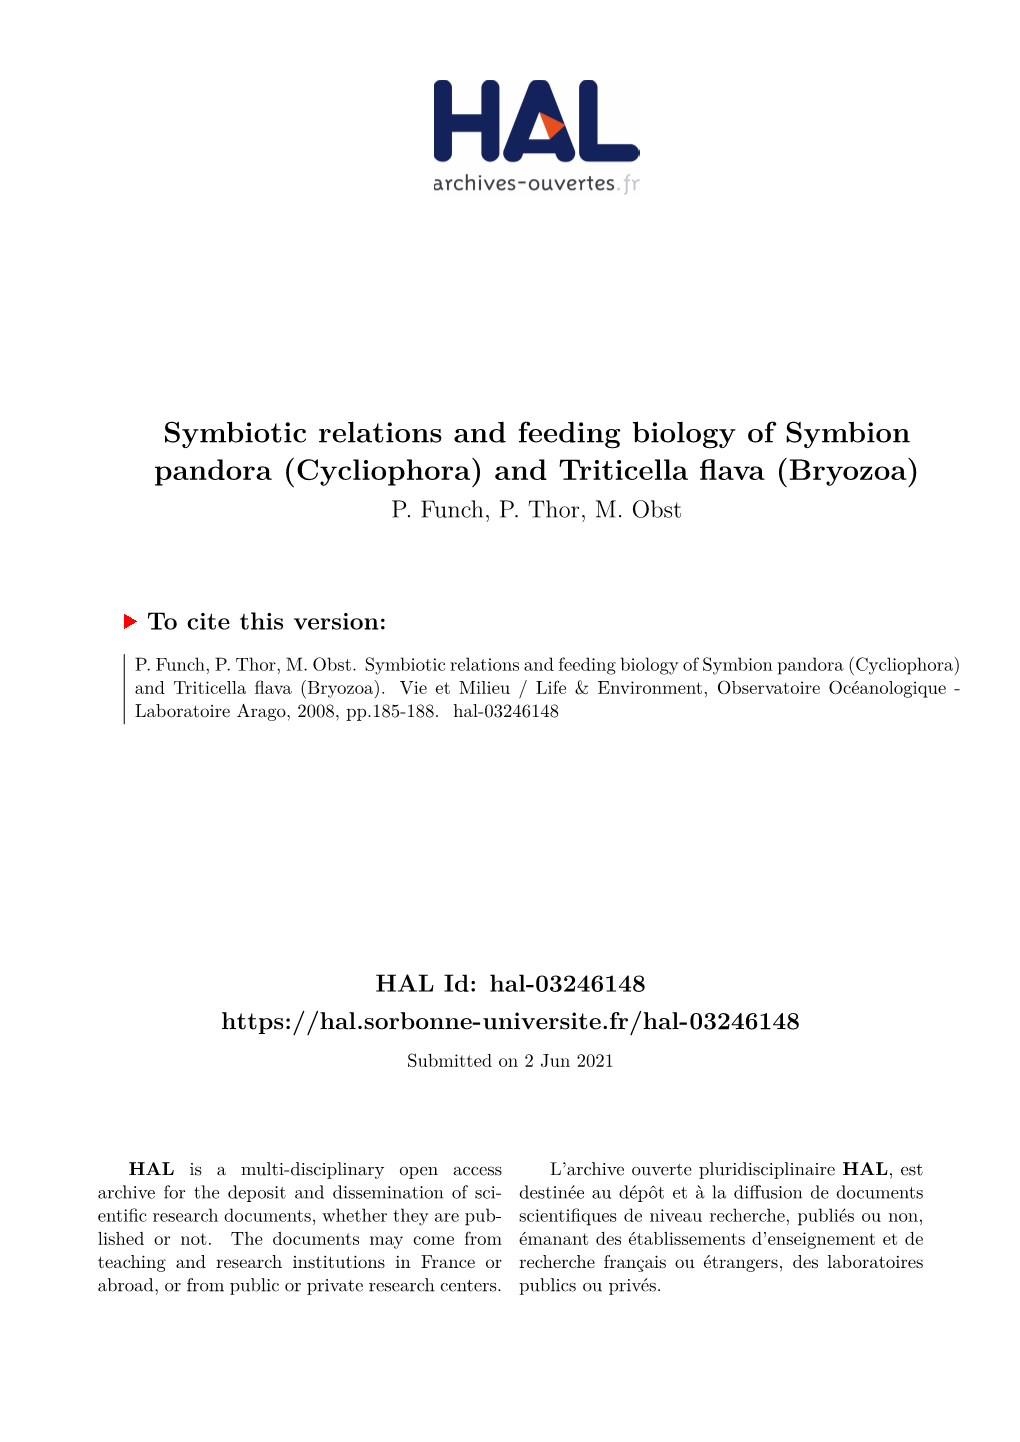 Symbiotic Relations and Feeding Biology of Symbion Pandora (Cycliophora) and Triticella Flava (Bryozoa) P